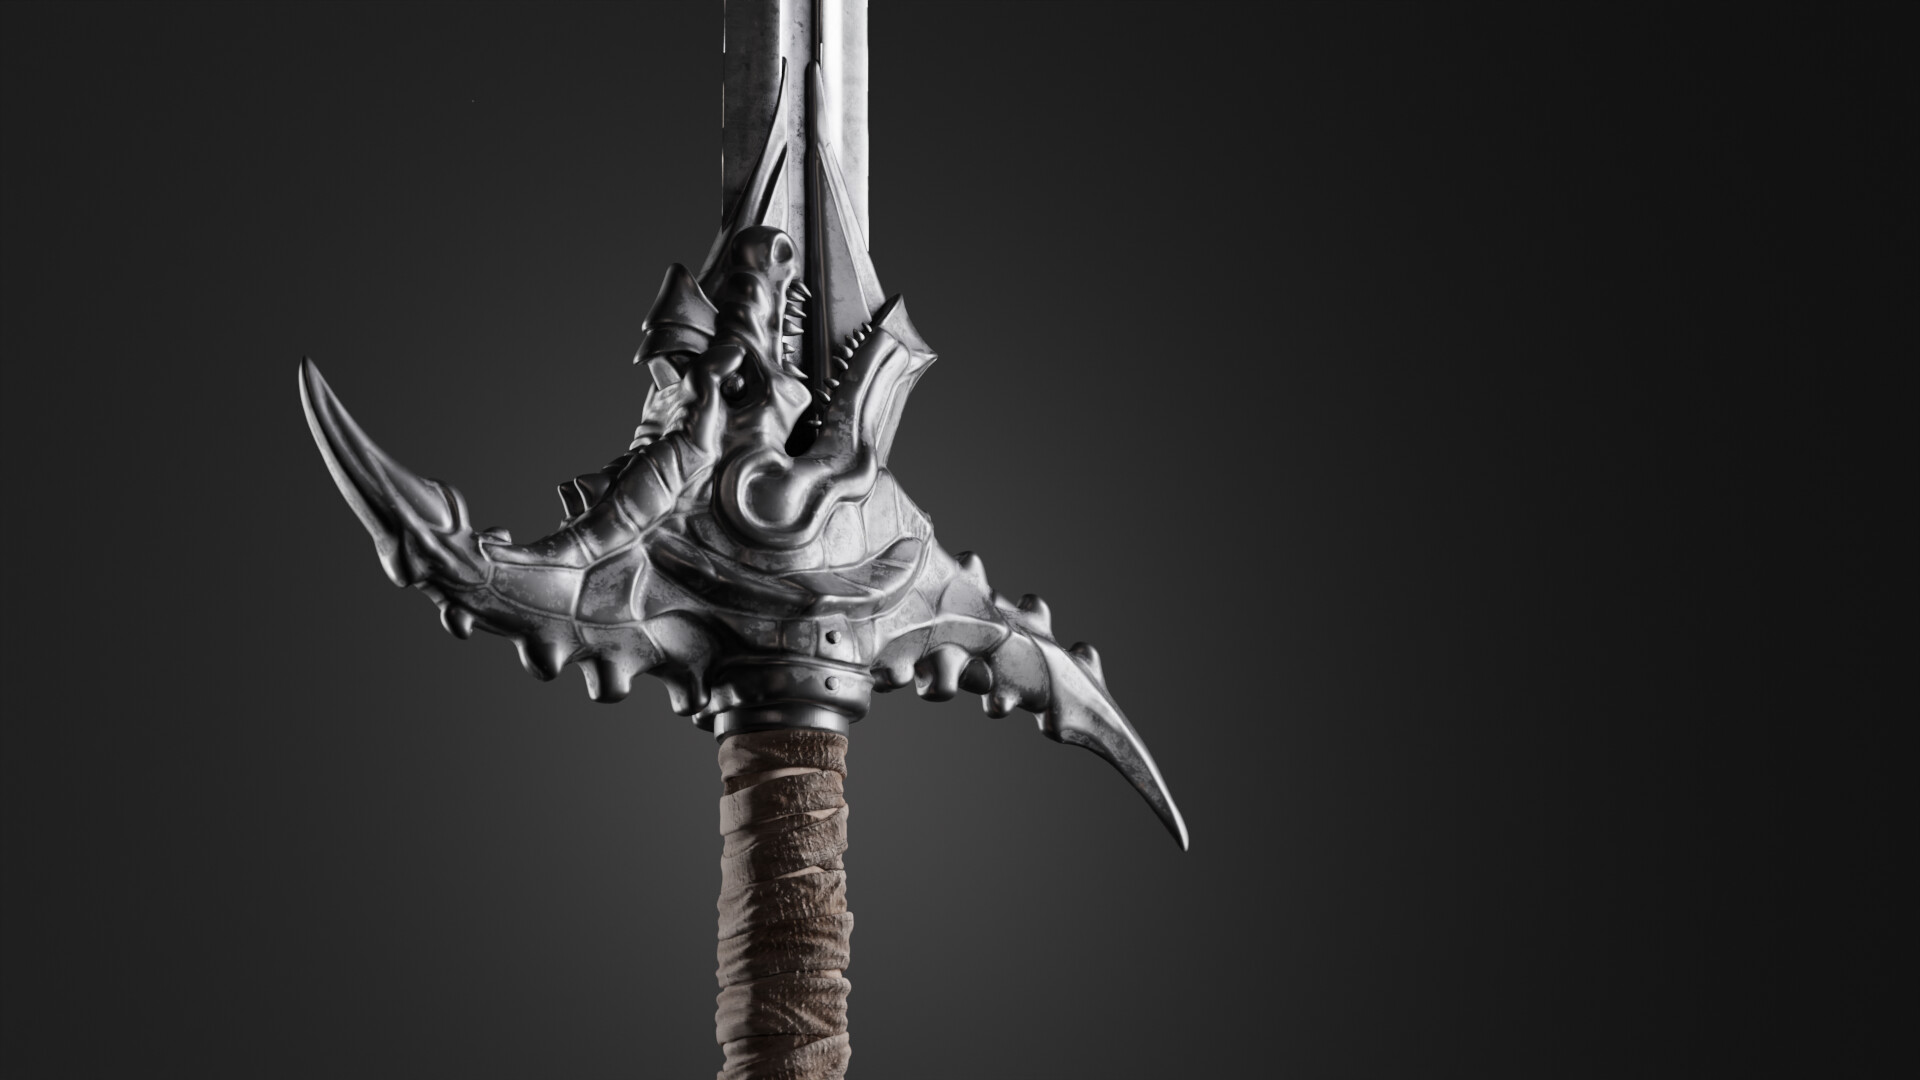 Making a 324lb Dragon Slayer sword